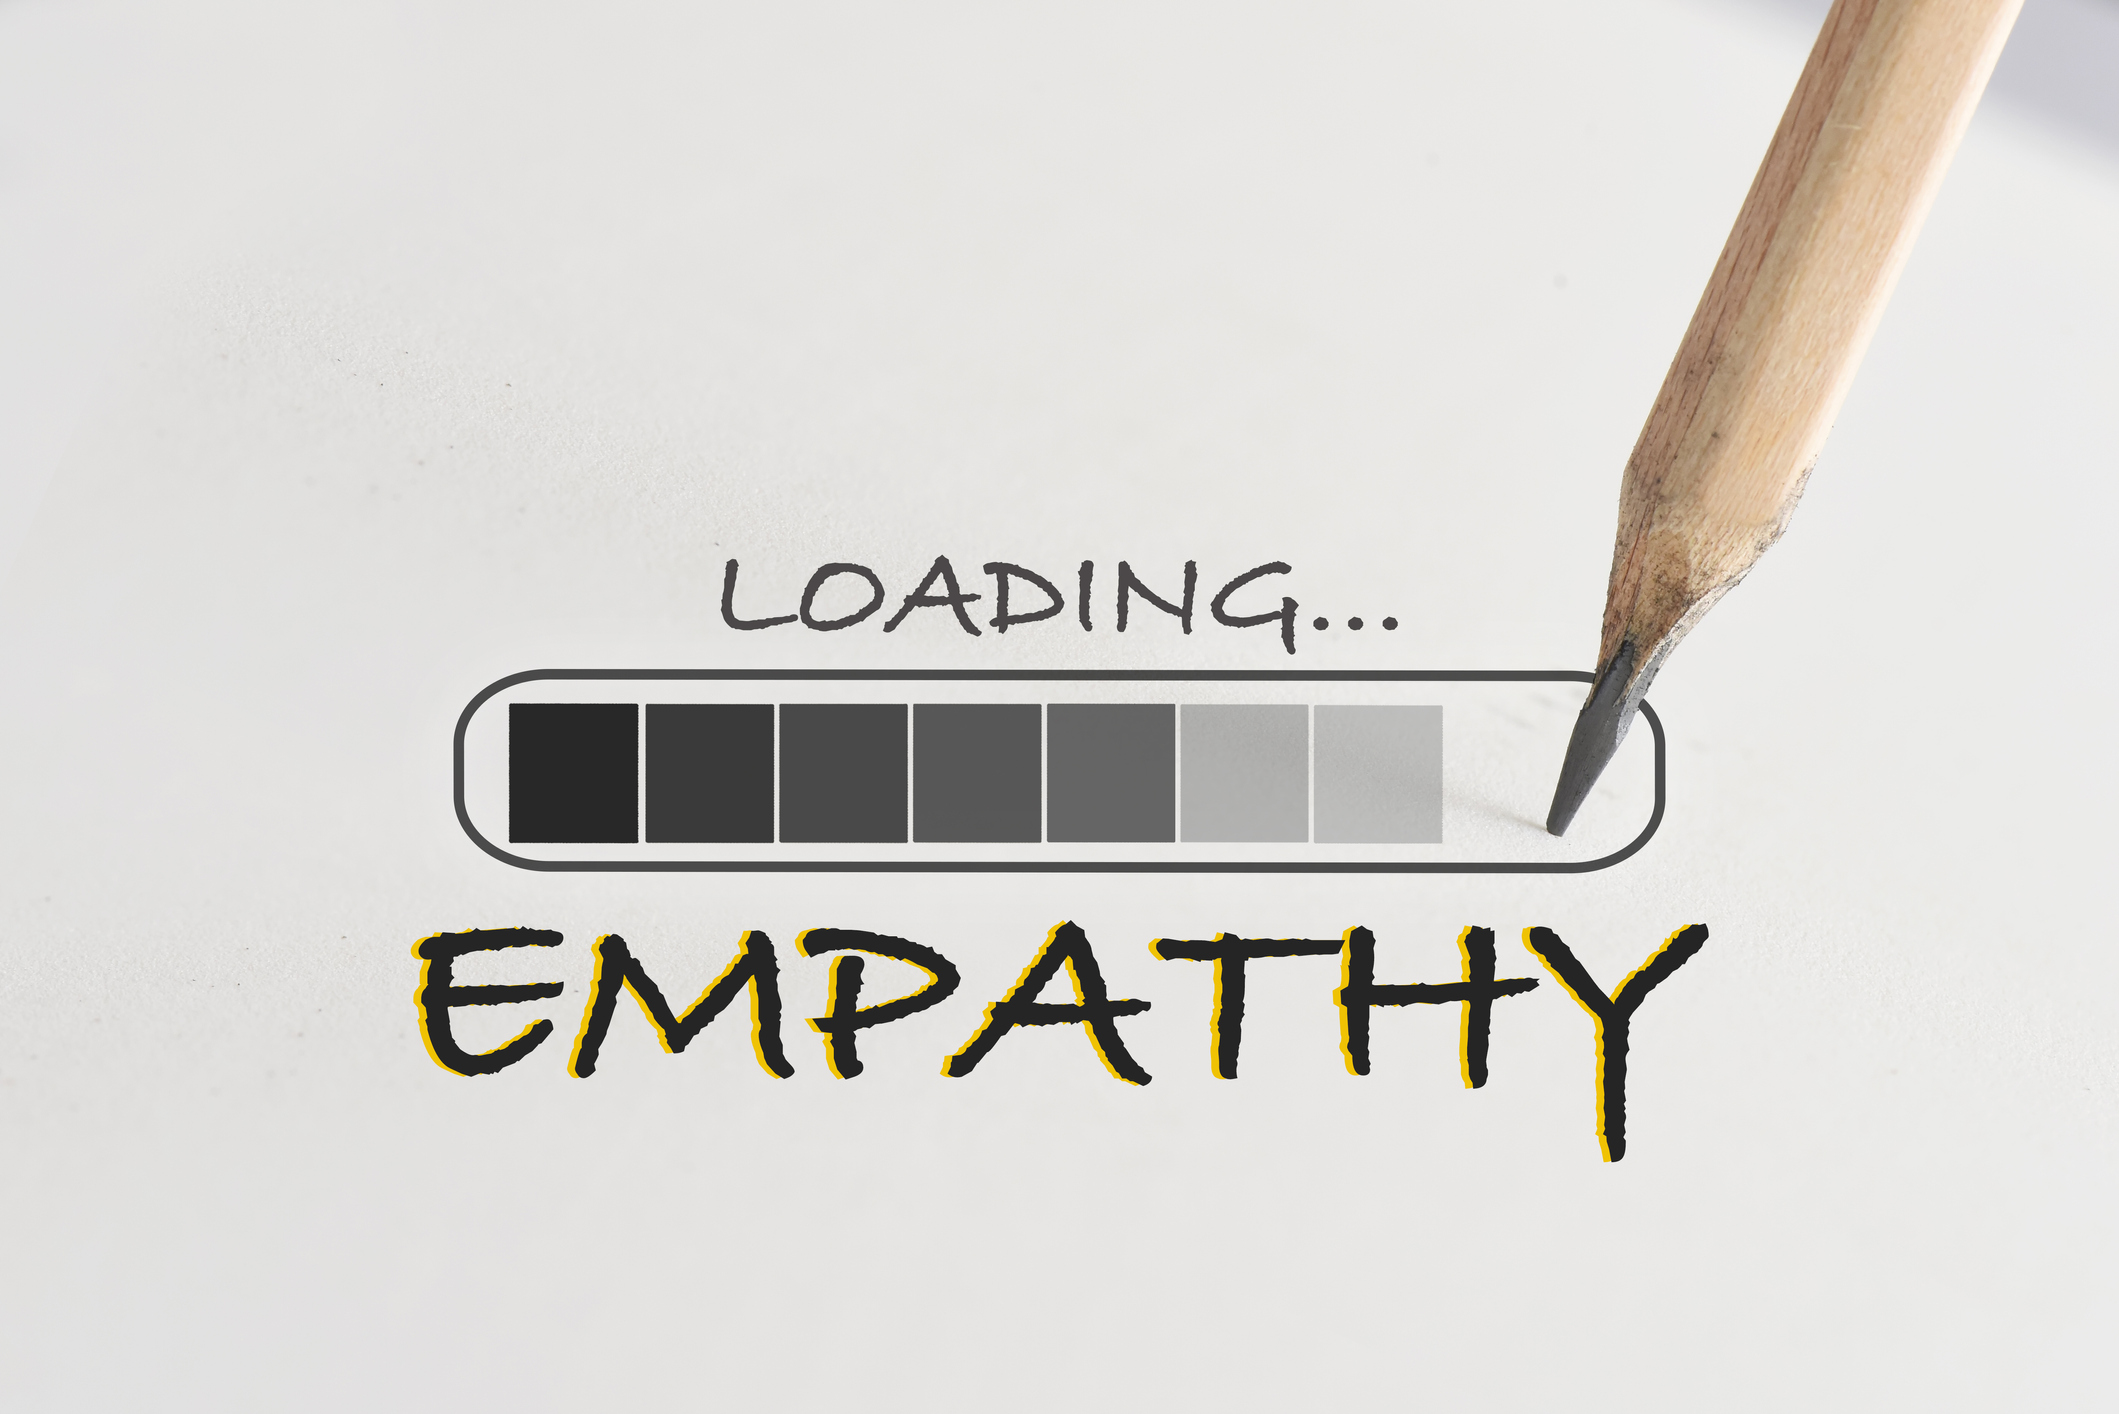 Empathy loading image.  Not having Empathy is one of poor leadership qualities.